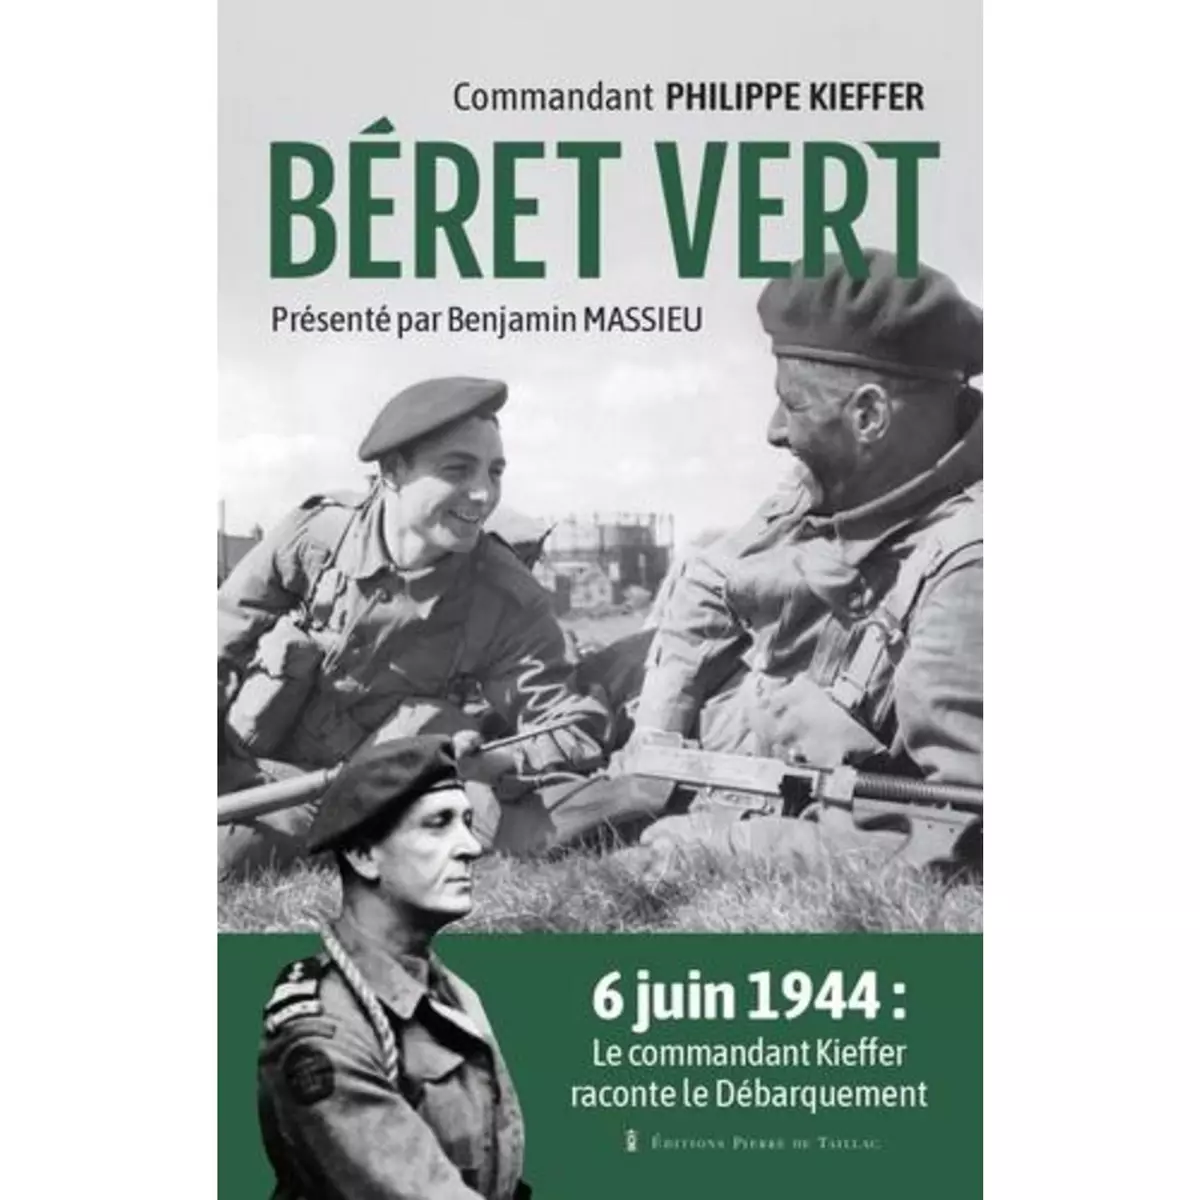  BERET VERT, Kieffer Philippe